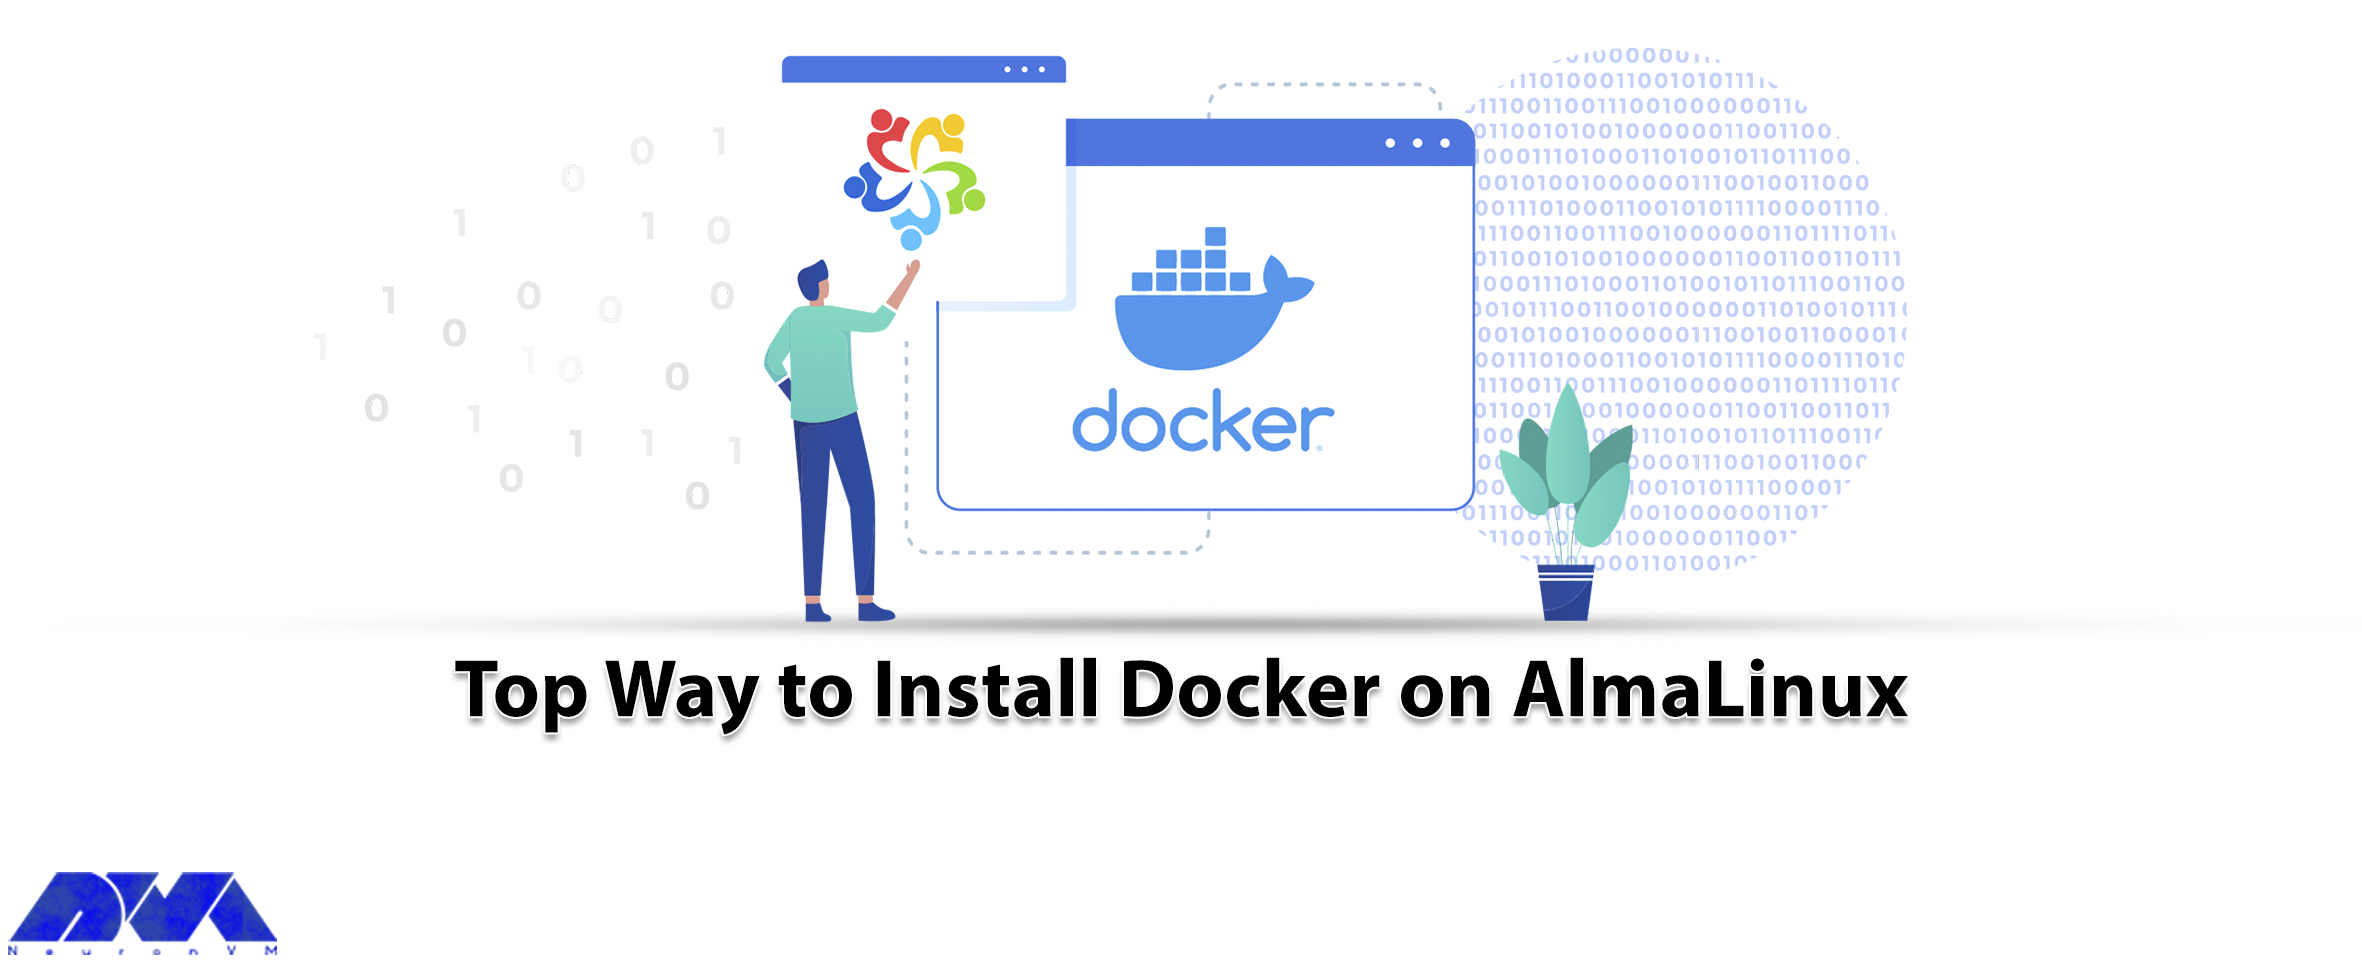 Top Way to Install Docker on AlmaLinux - NeuronVM